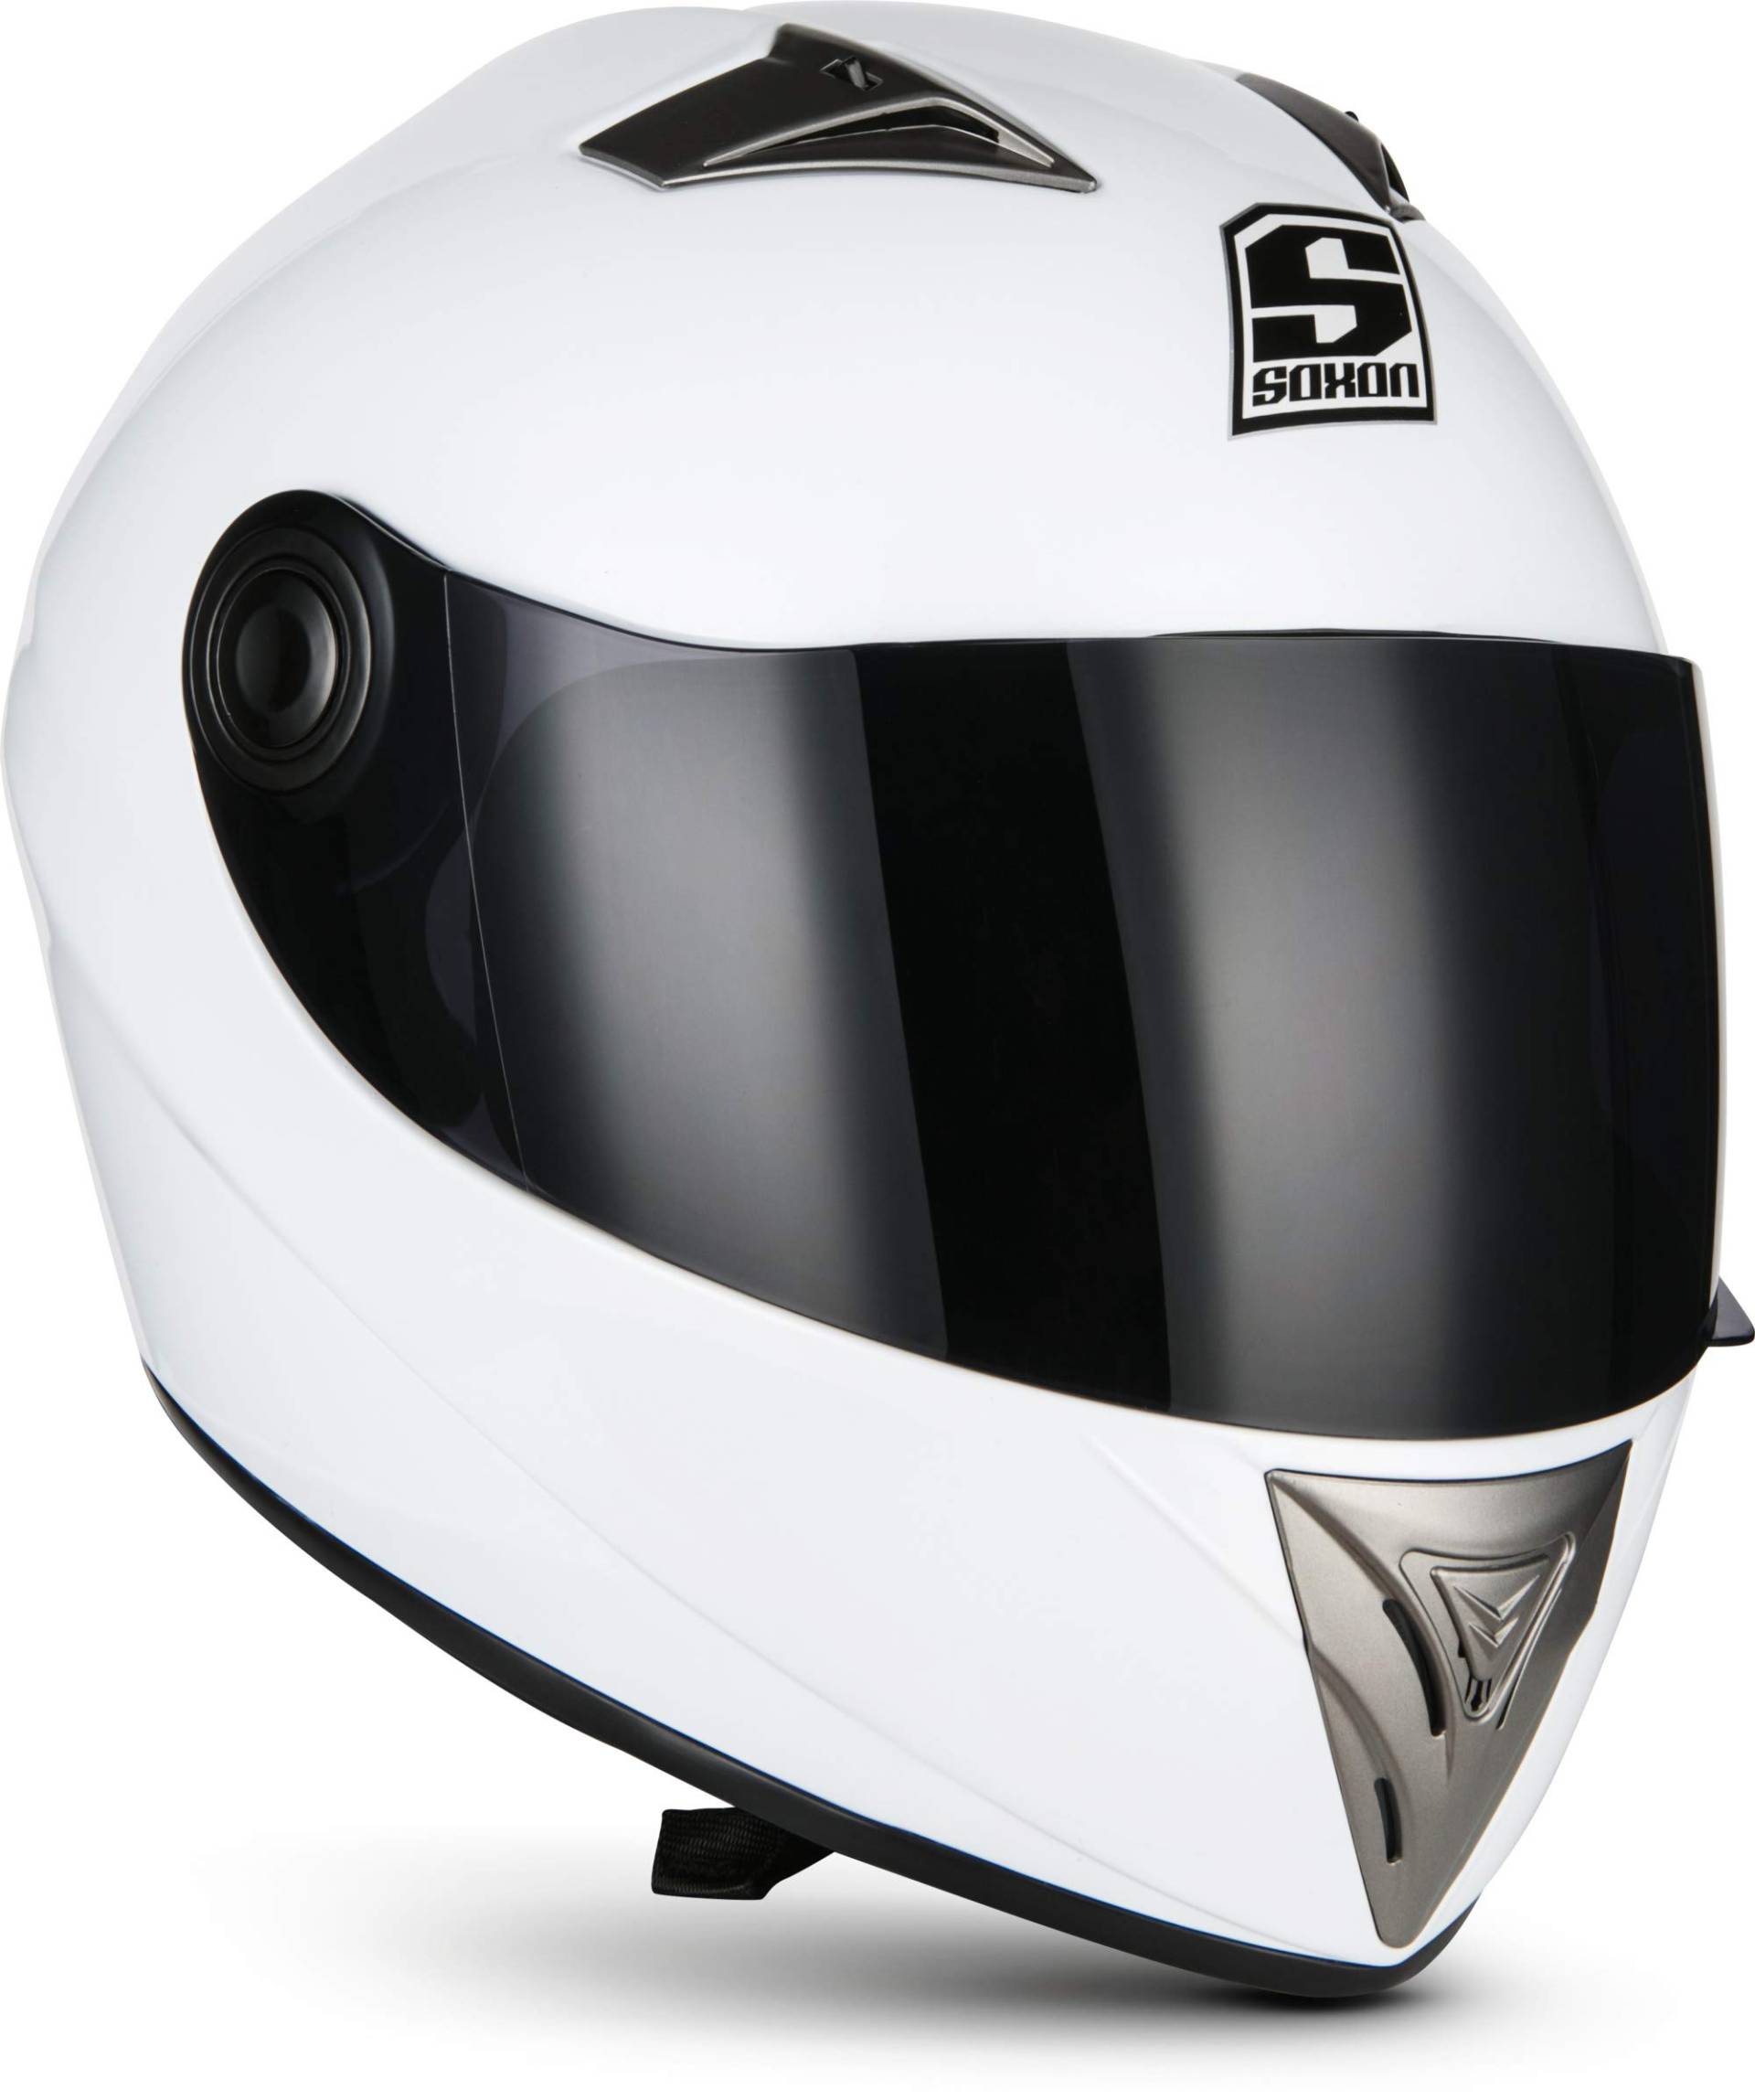 Soxon® ST-550 „Snow“ · Integral-Helm · Full-Face Motorrad-Helm Roller-Helm Scooter-Helm Cruiser Sturz-Helm StreetFighter-Helm Sport Urban Helmet · ECE 22.05 Visier Schnellverschluss Tasche S (55-56cm) von Soxon